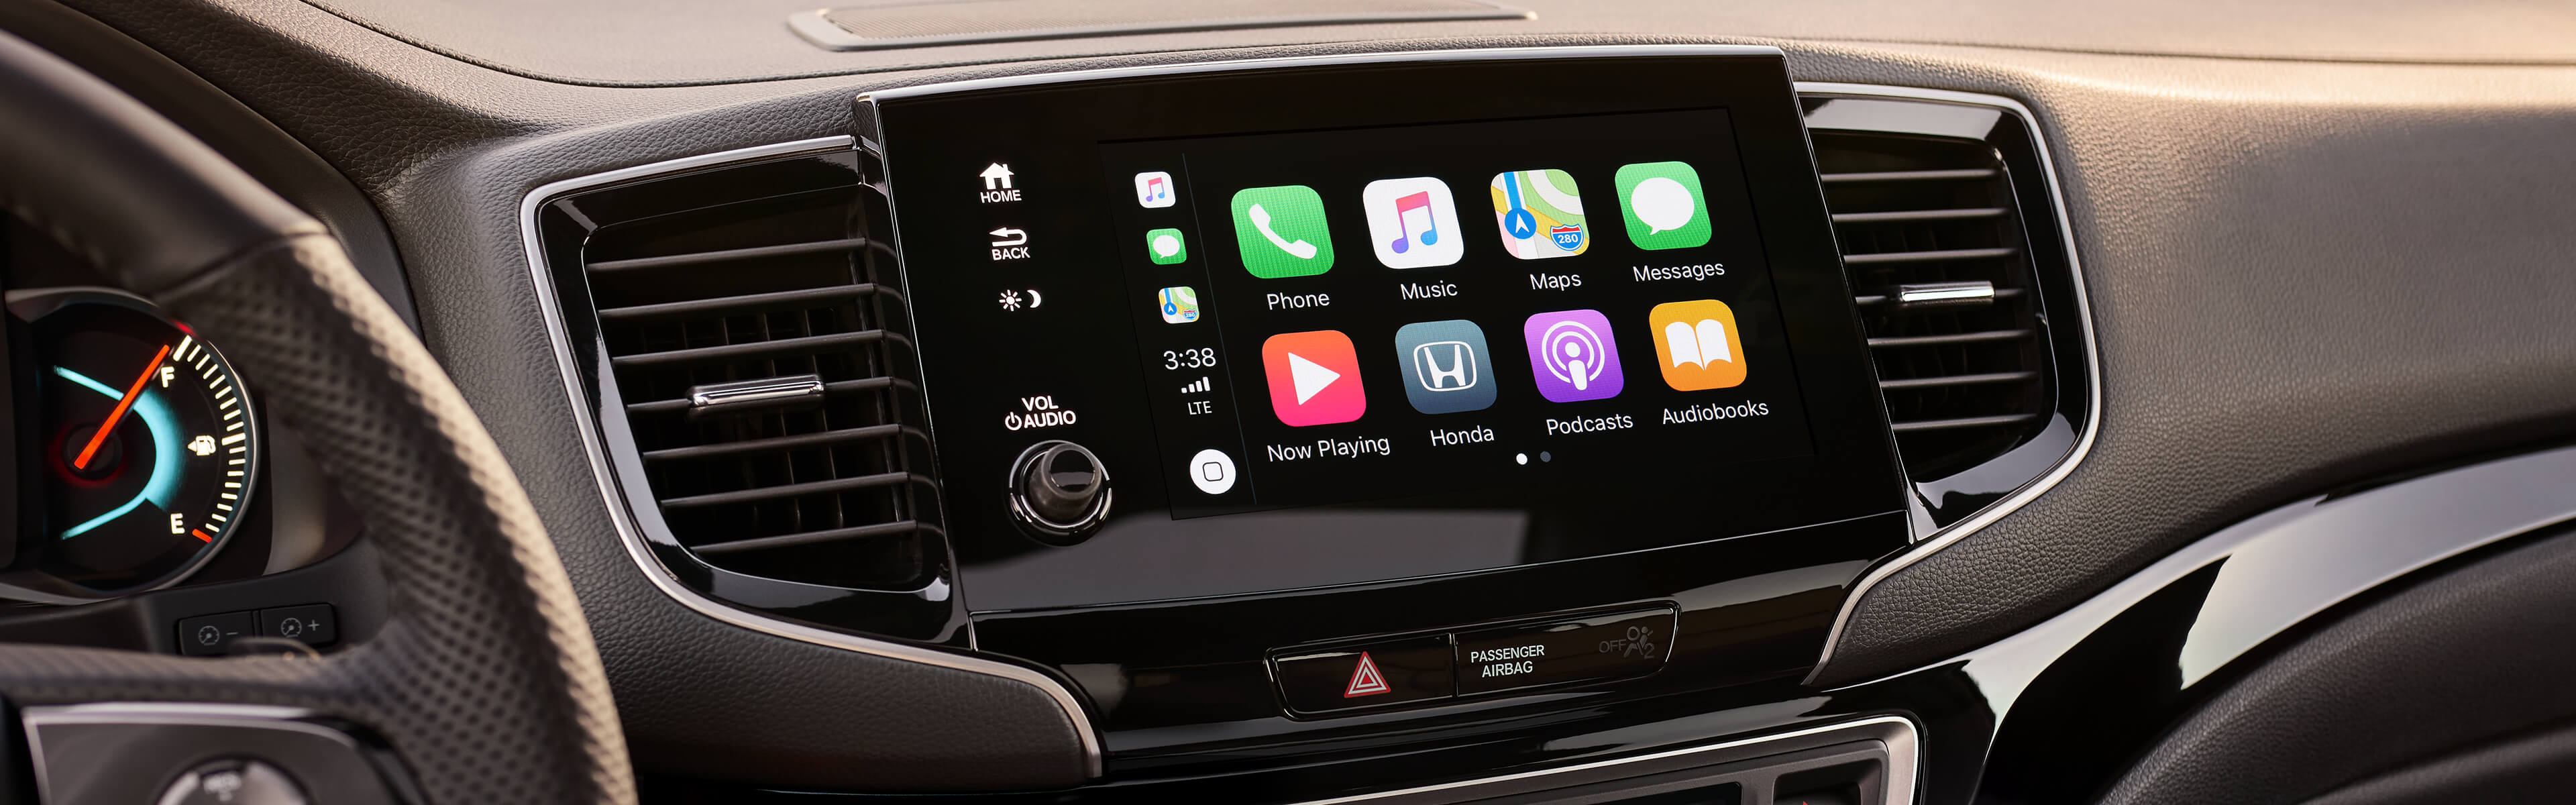 Interior front dashboard view of 2021 Honda Passport Apple CarPlay™ feature.